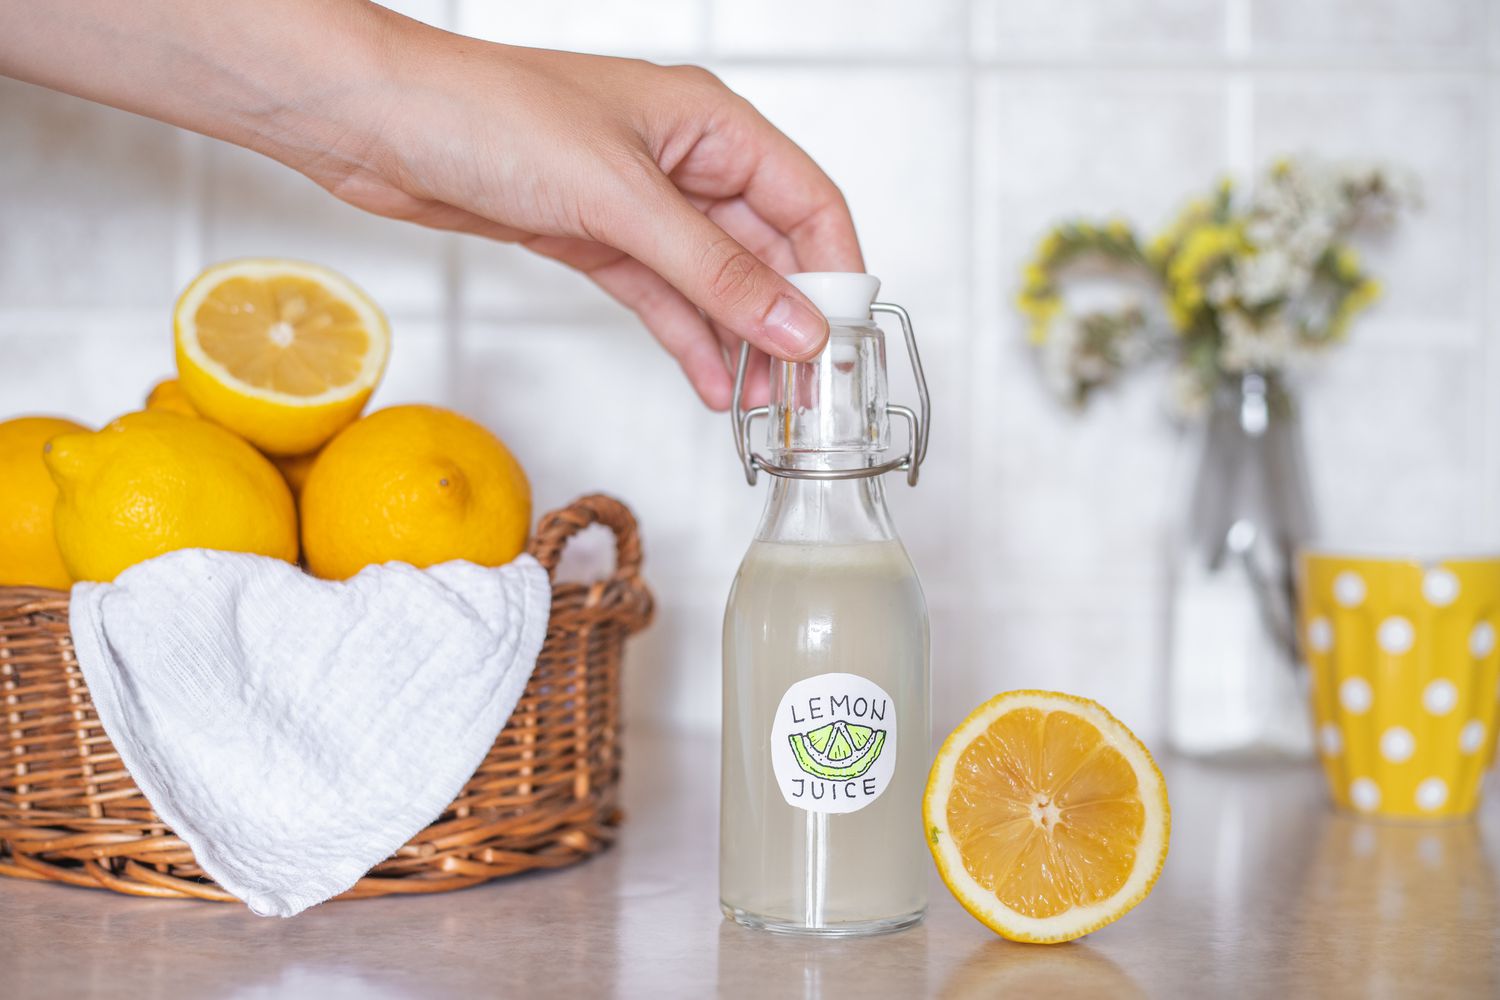 Lemon Juice: A Natural Antioxidant